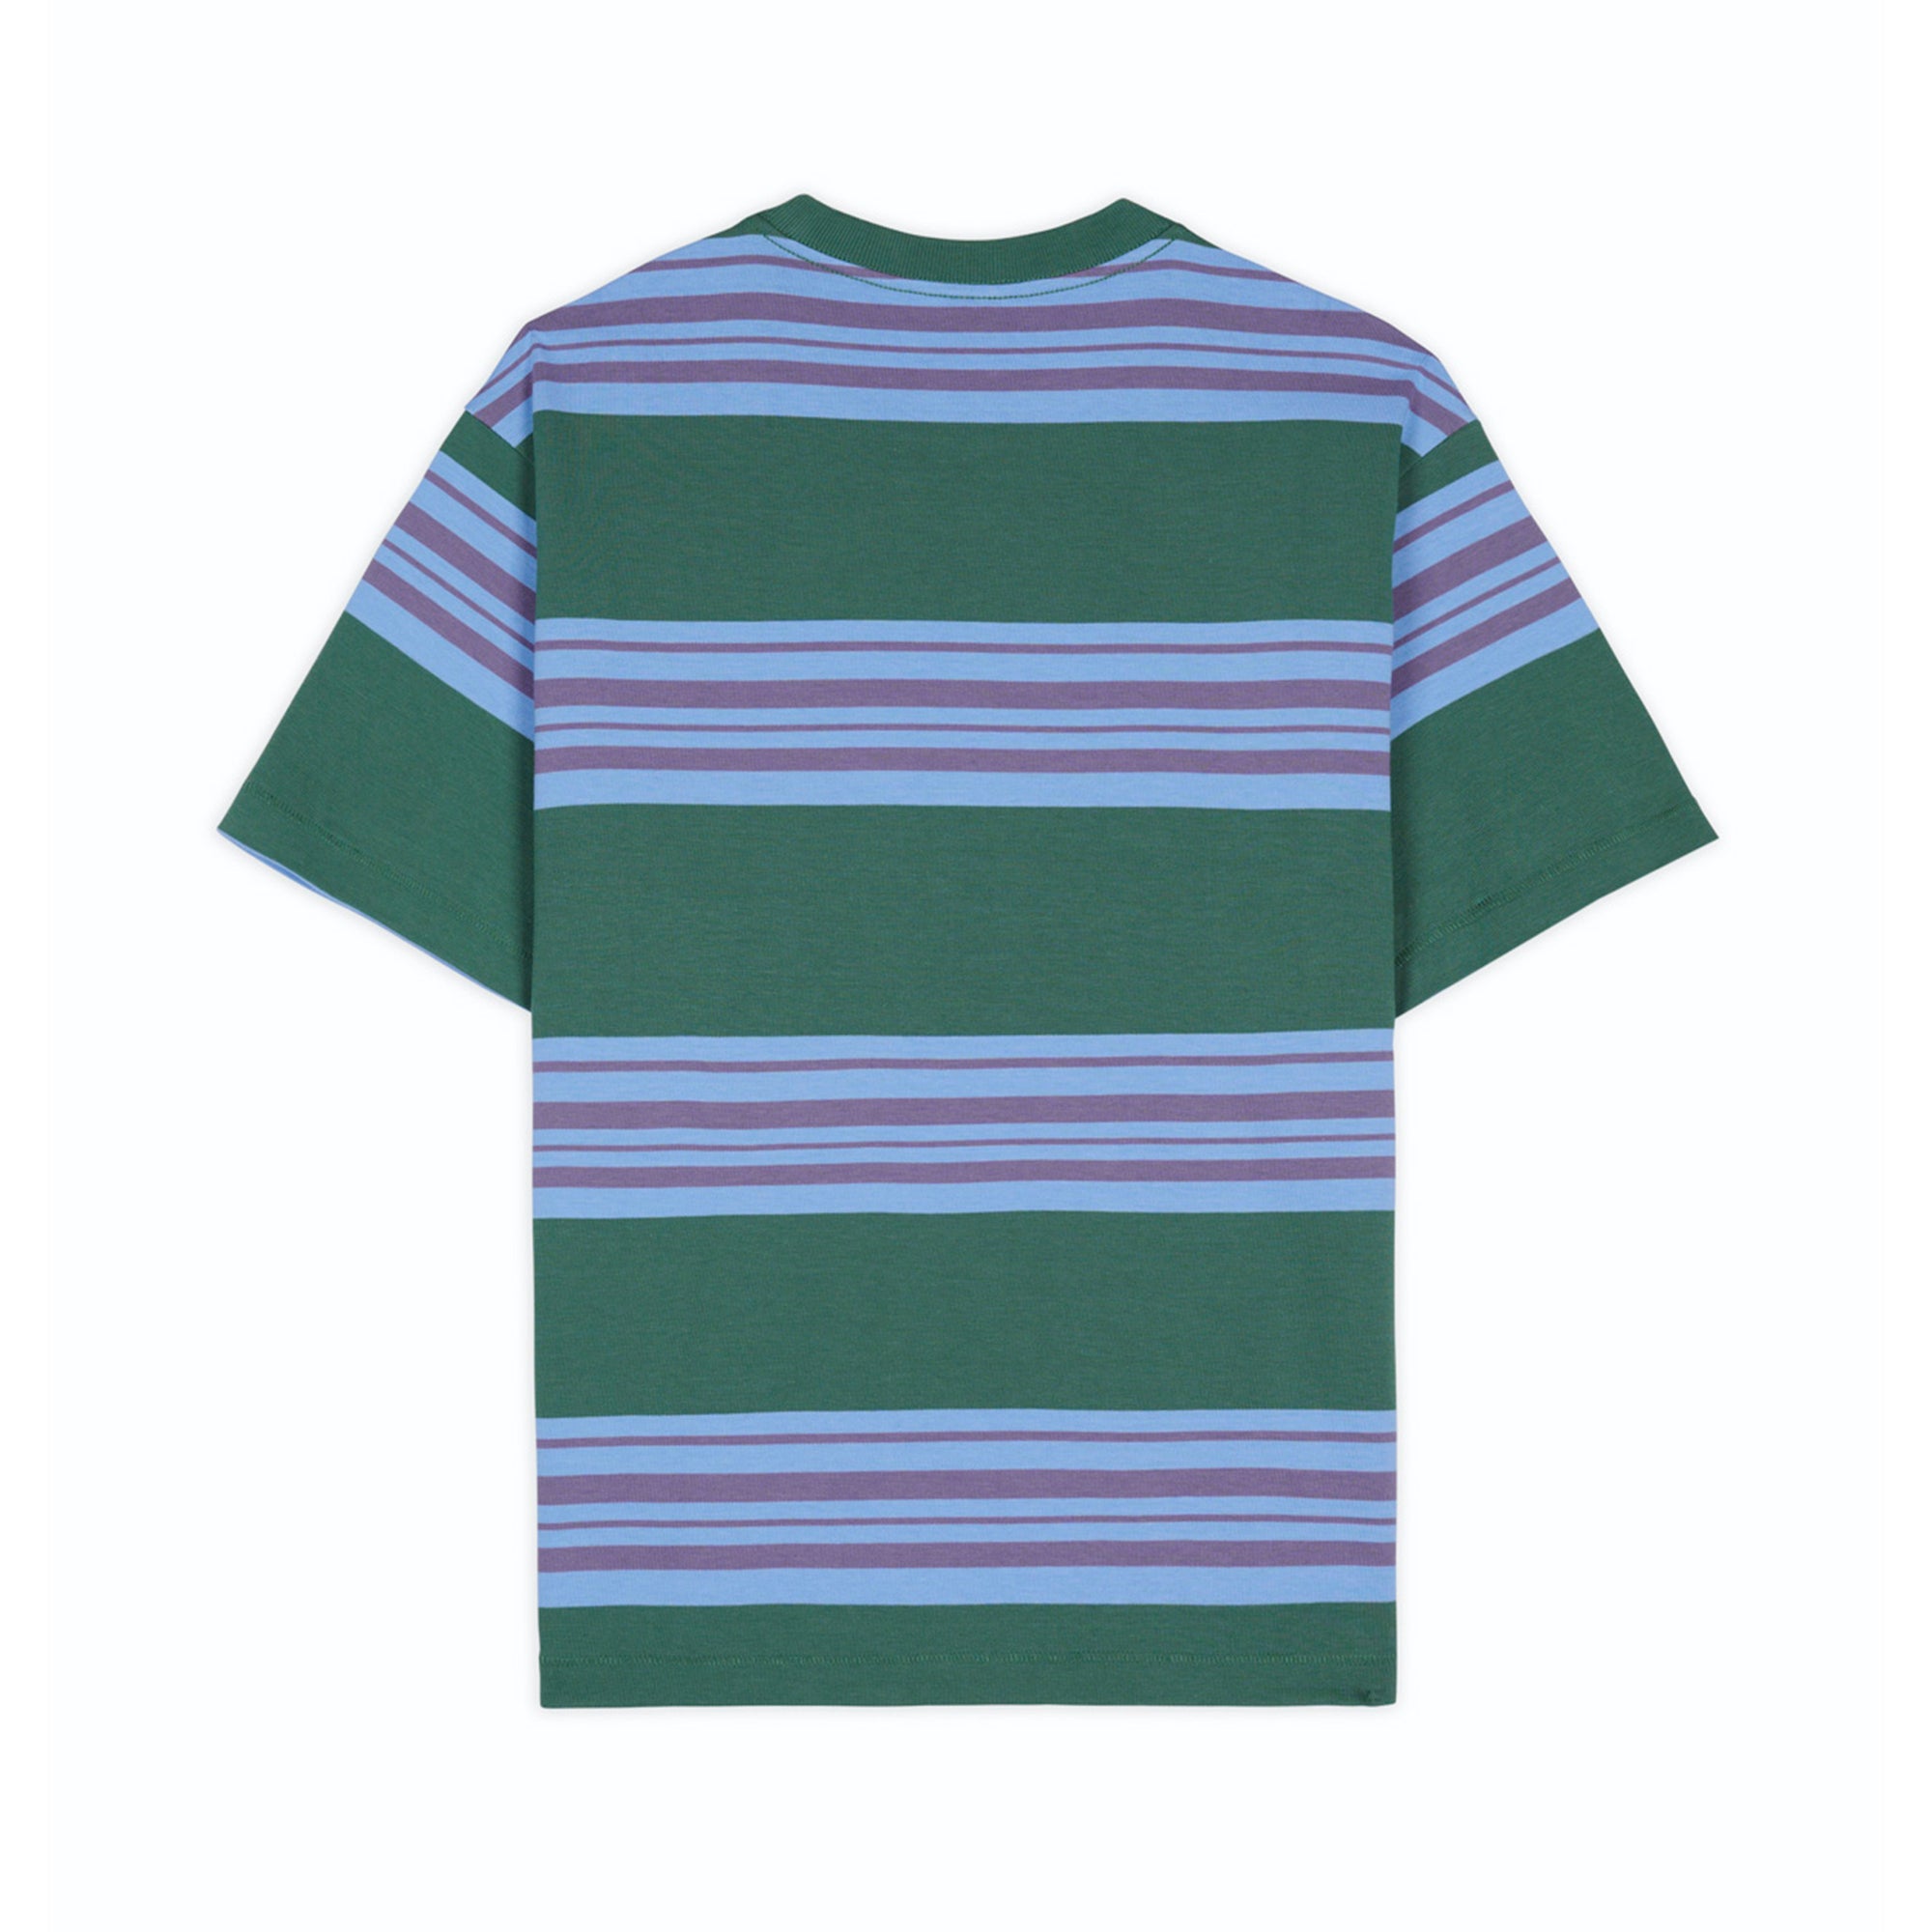 Brain Dead - Men's Baker Striped Pocket T-Shirt - (Green) view 2